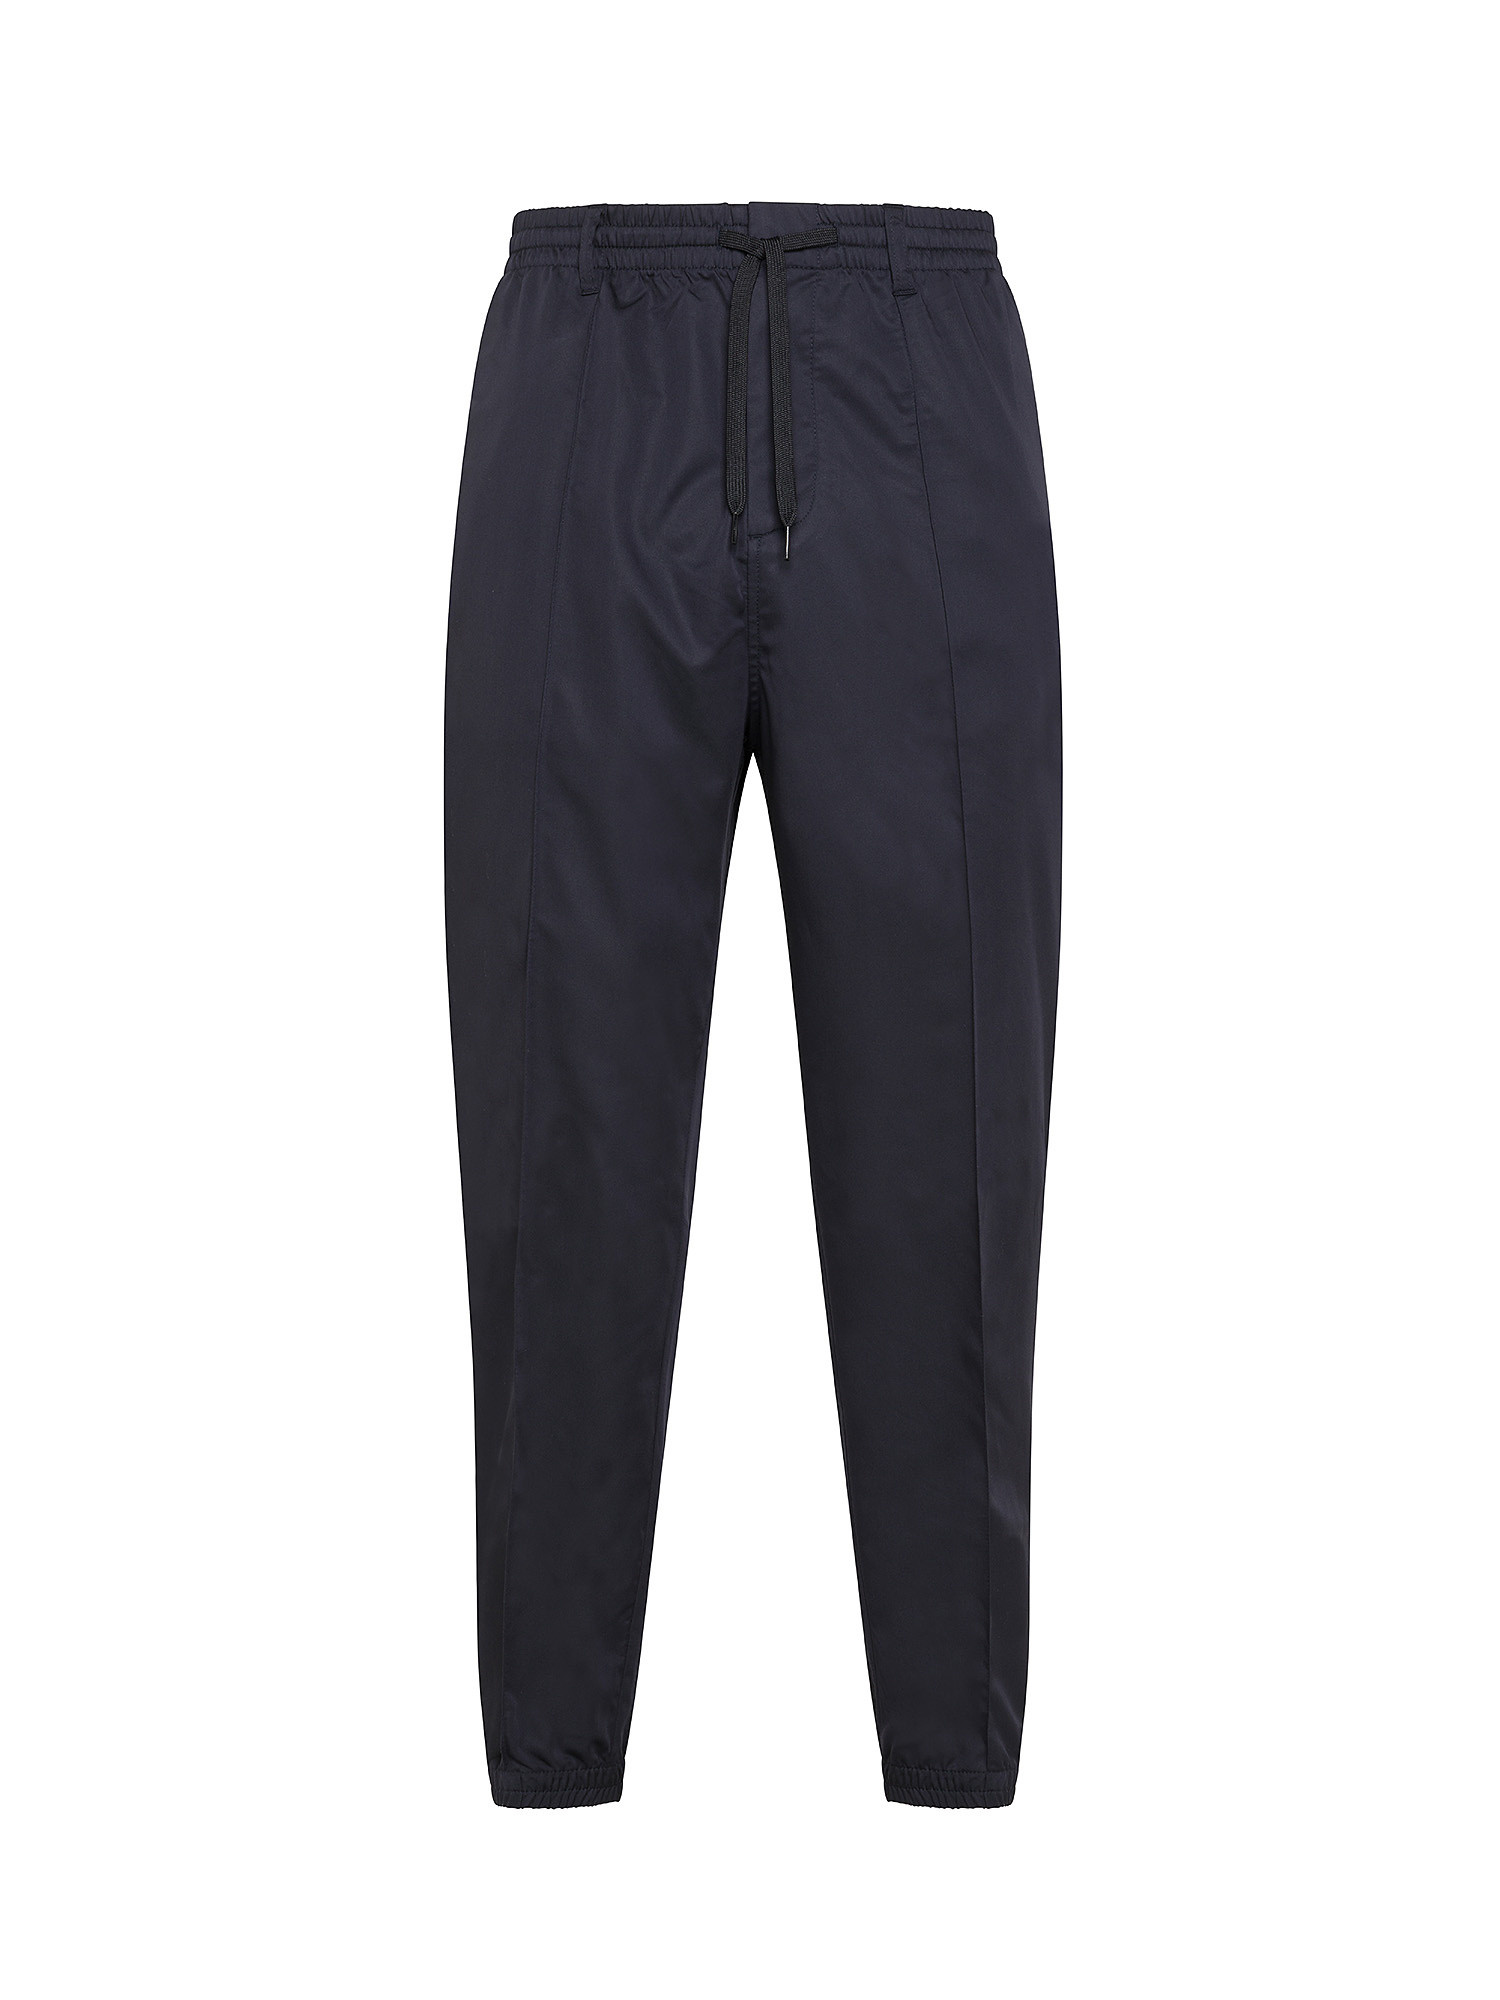 Emporio Armani - Pantaloni con coulisse, Blu scuro, large image number 0